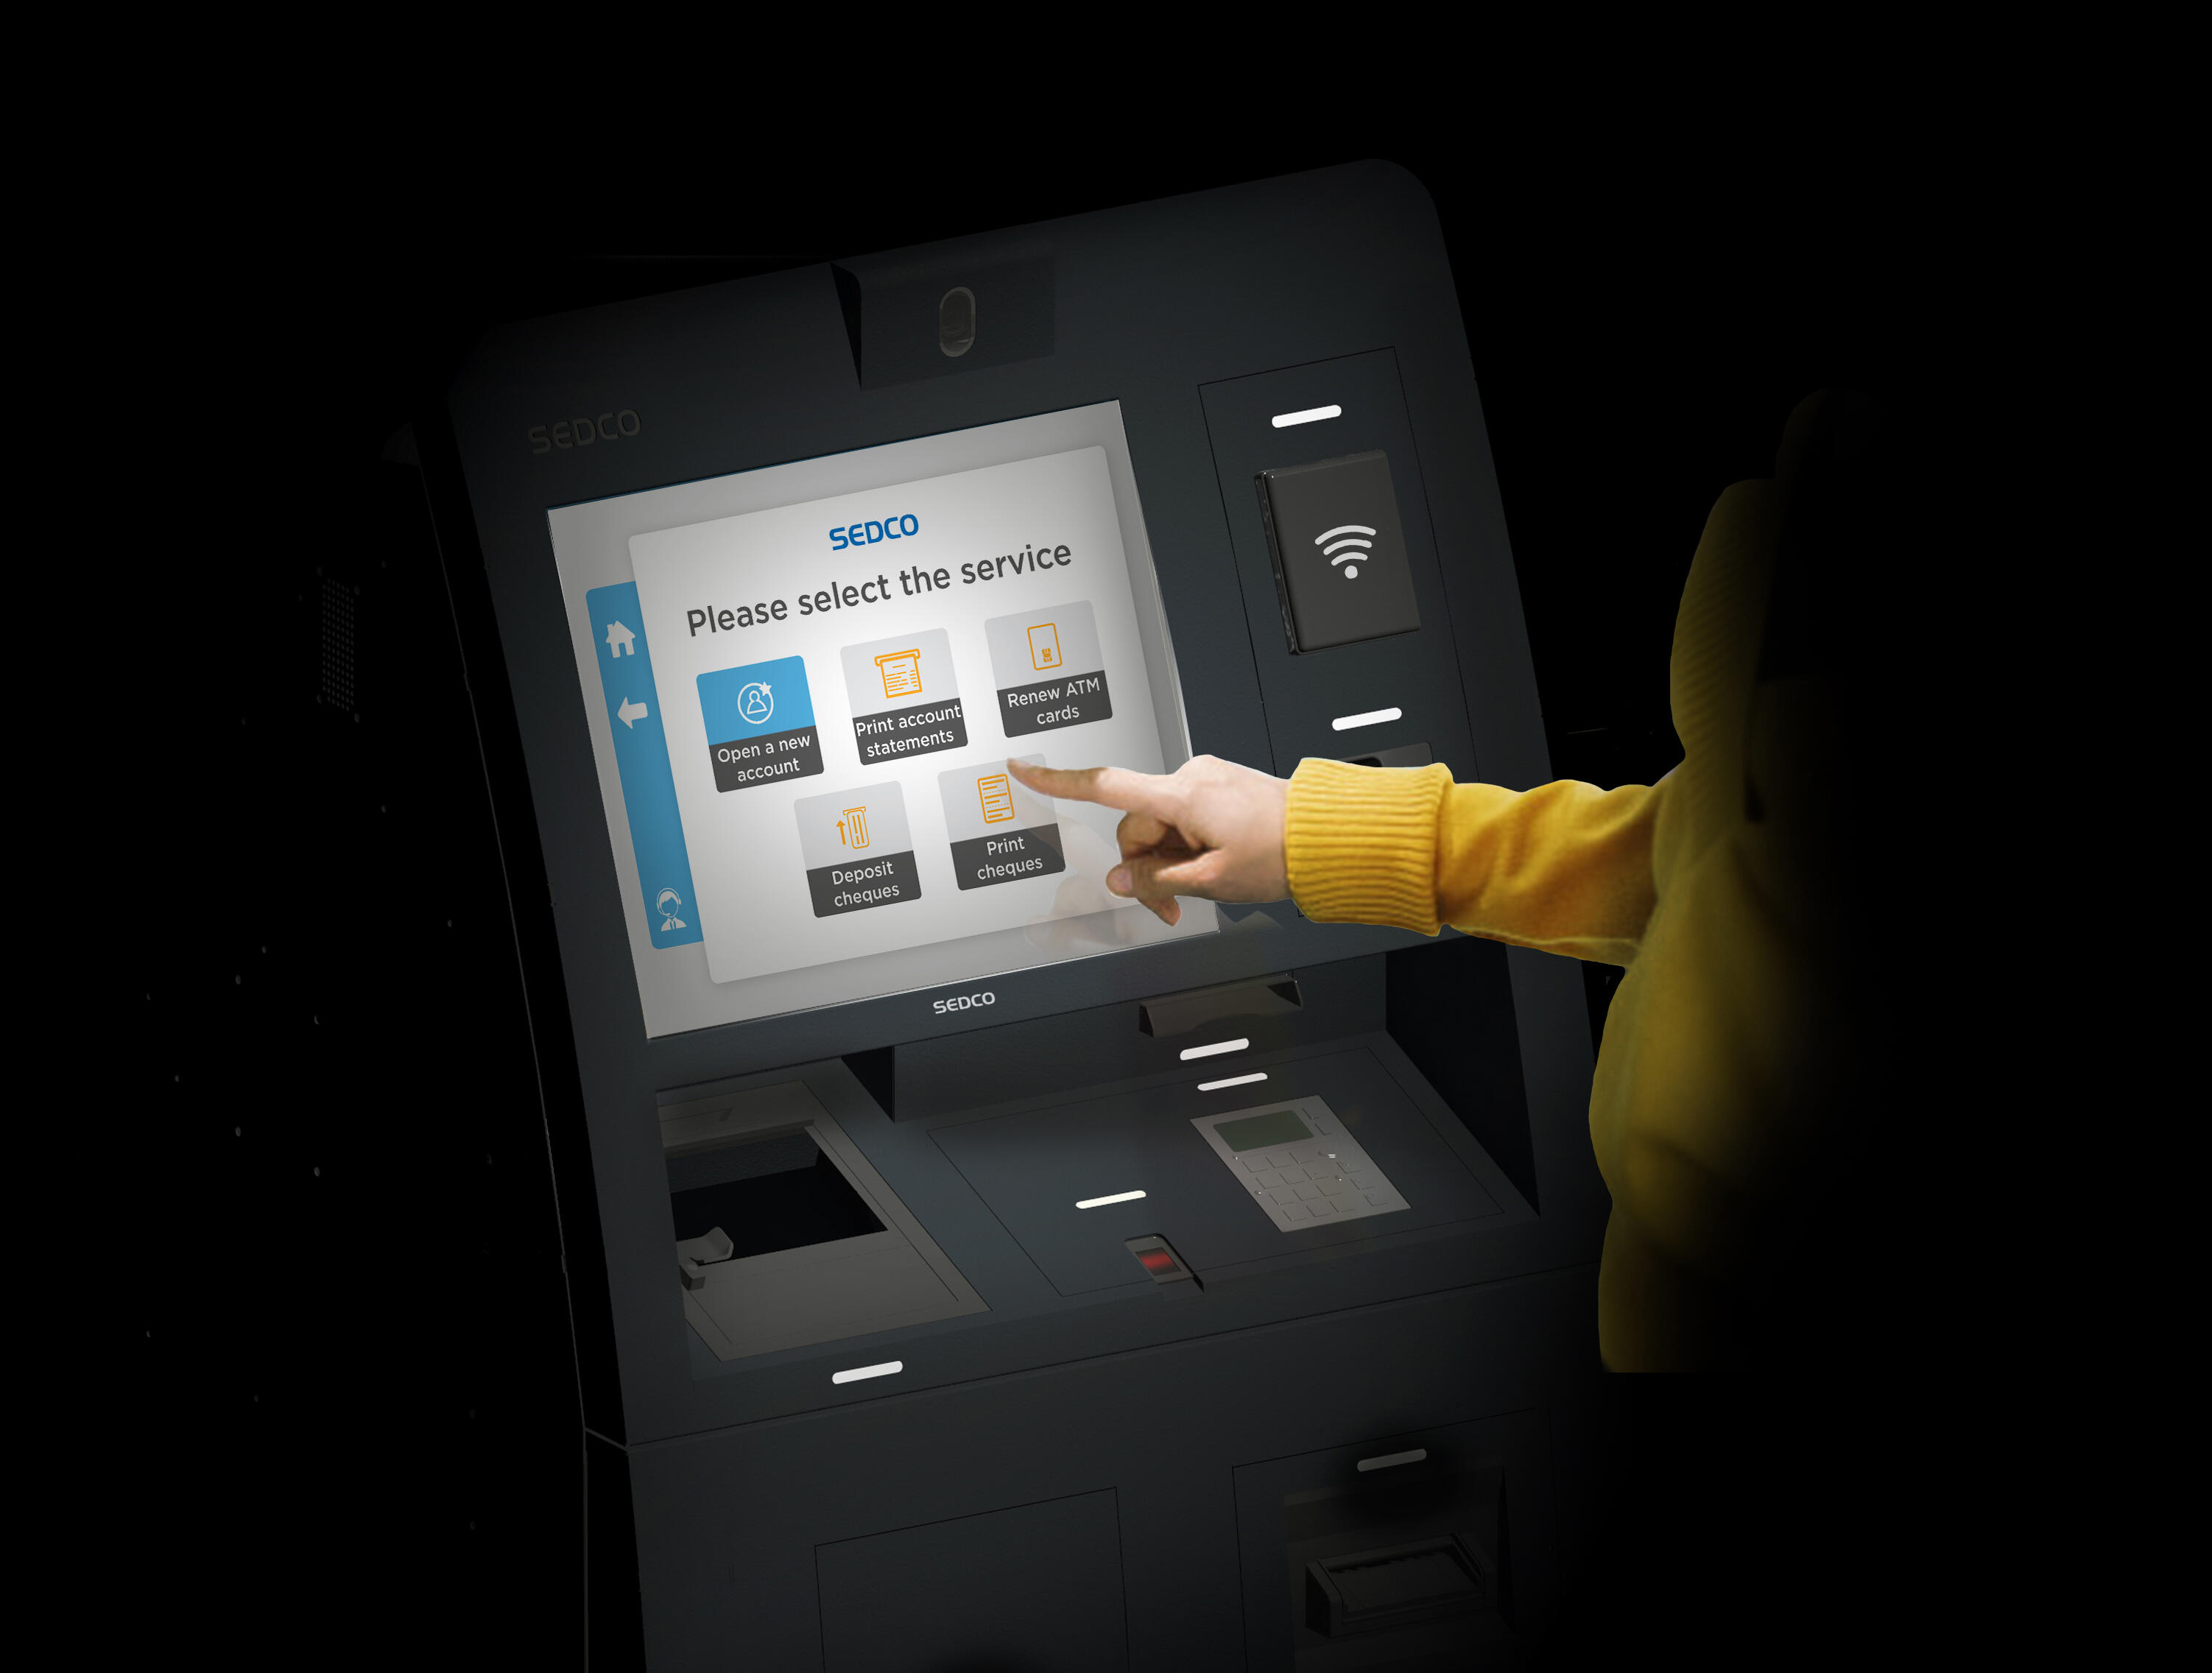 SEDCO's self-service kiosks for banks